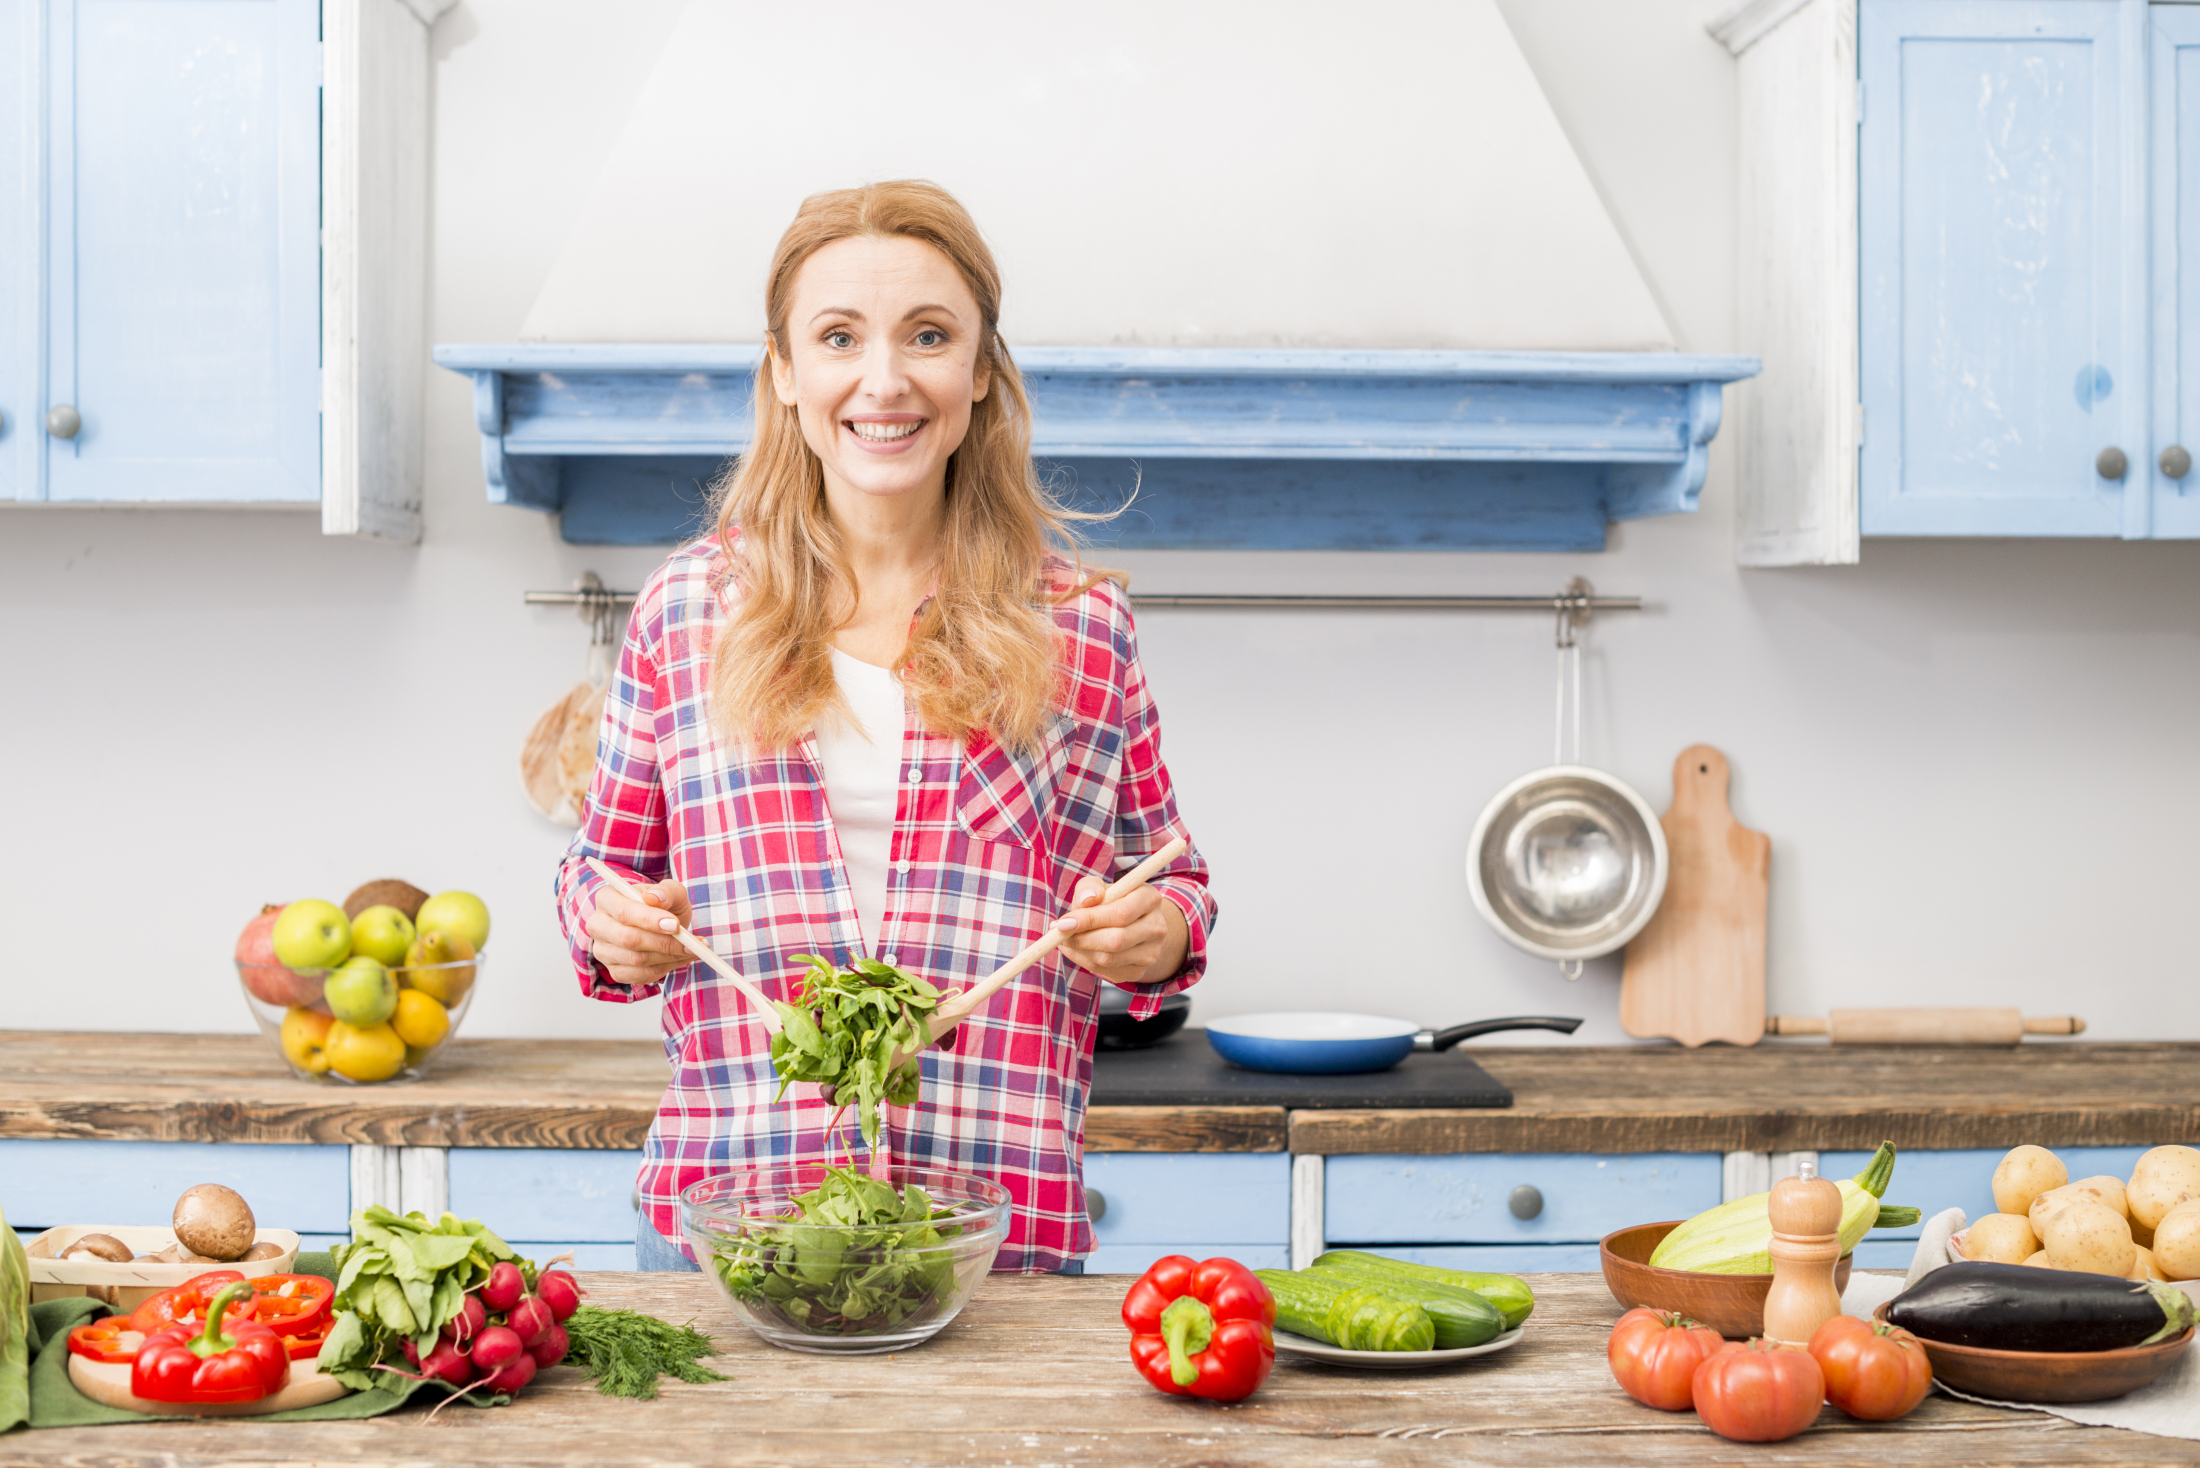 portrait-smiling-young-woman-preparing-vegetable-salad-kitchen.jpg